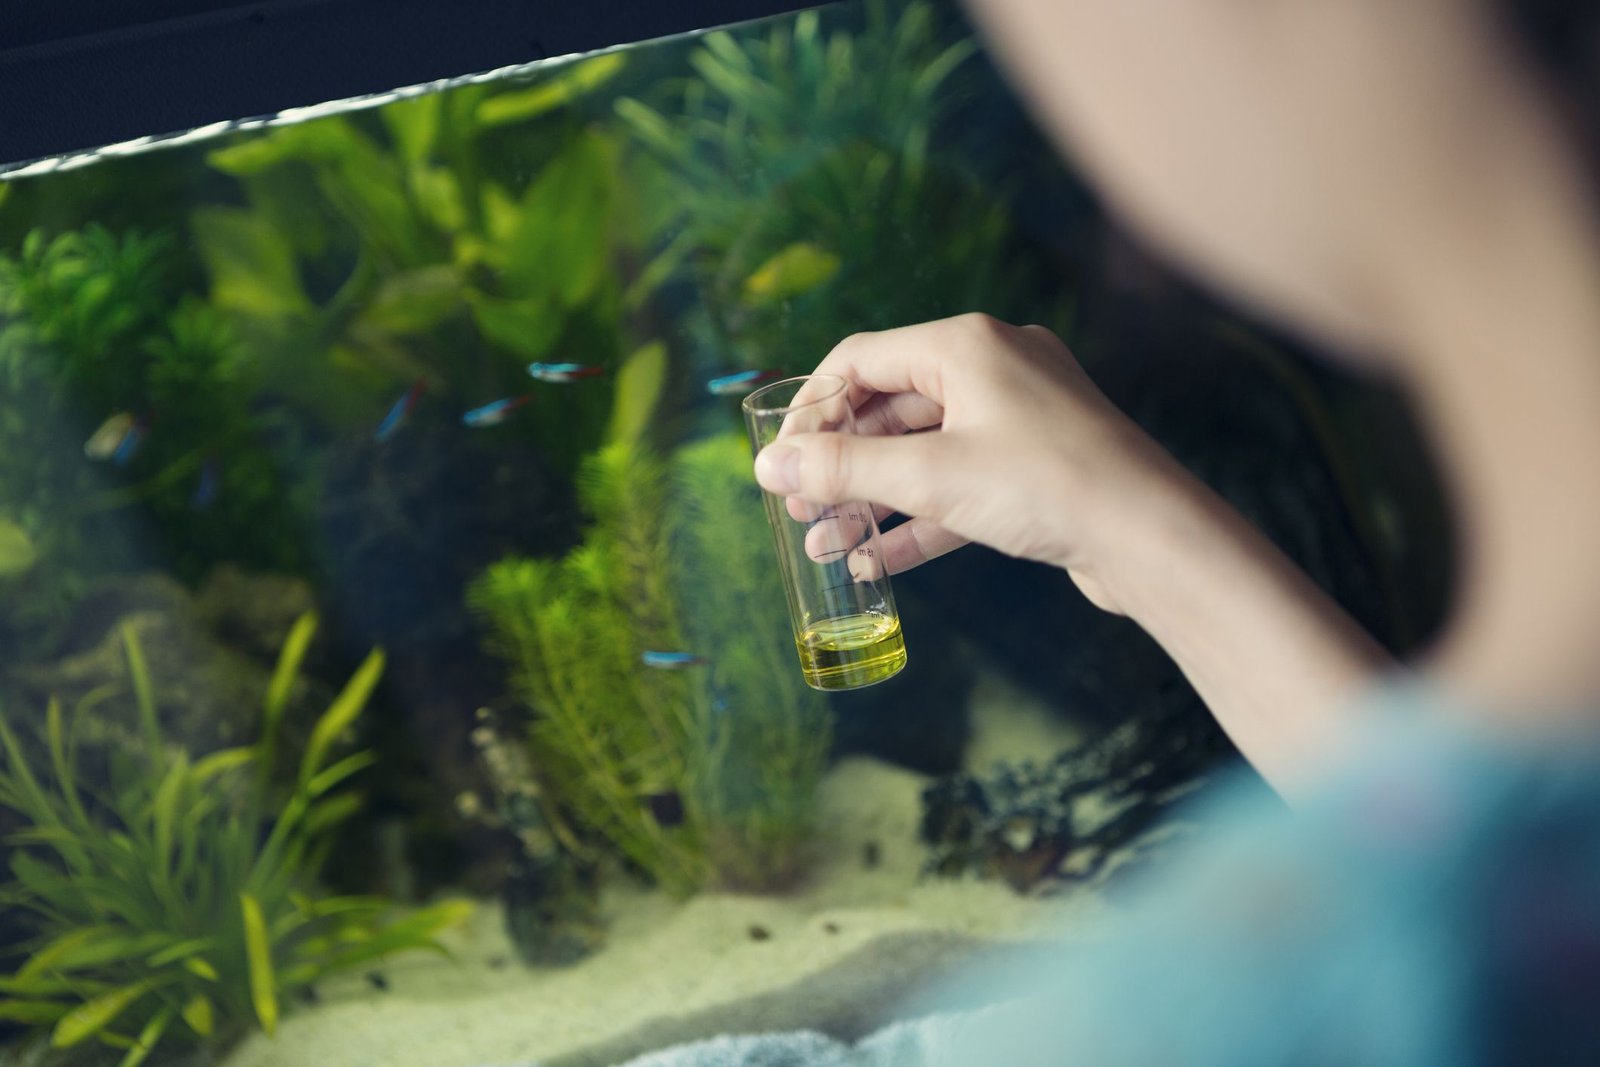 Aquarium Water Parameters to Control for Healthy Fish